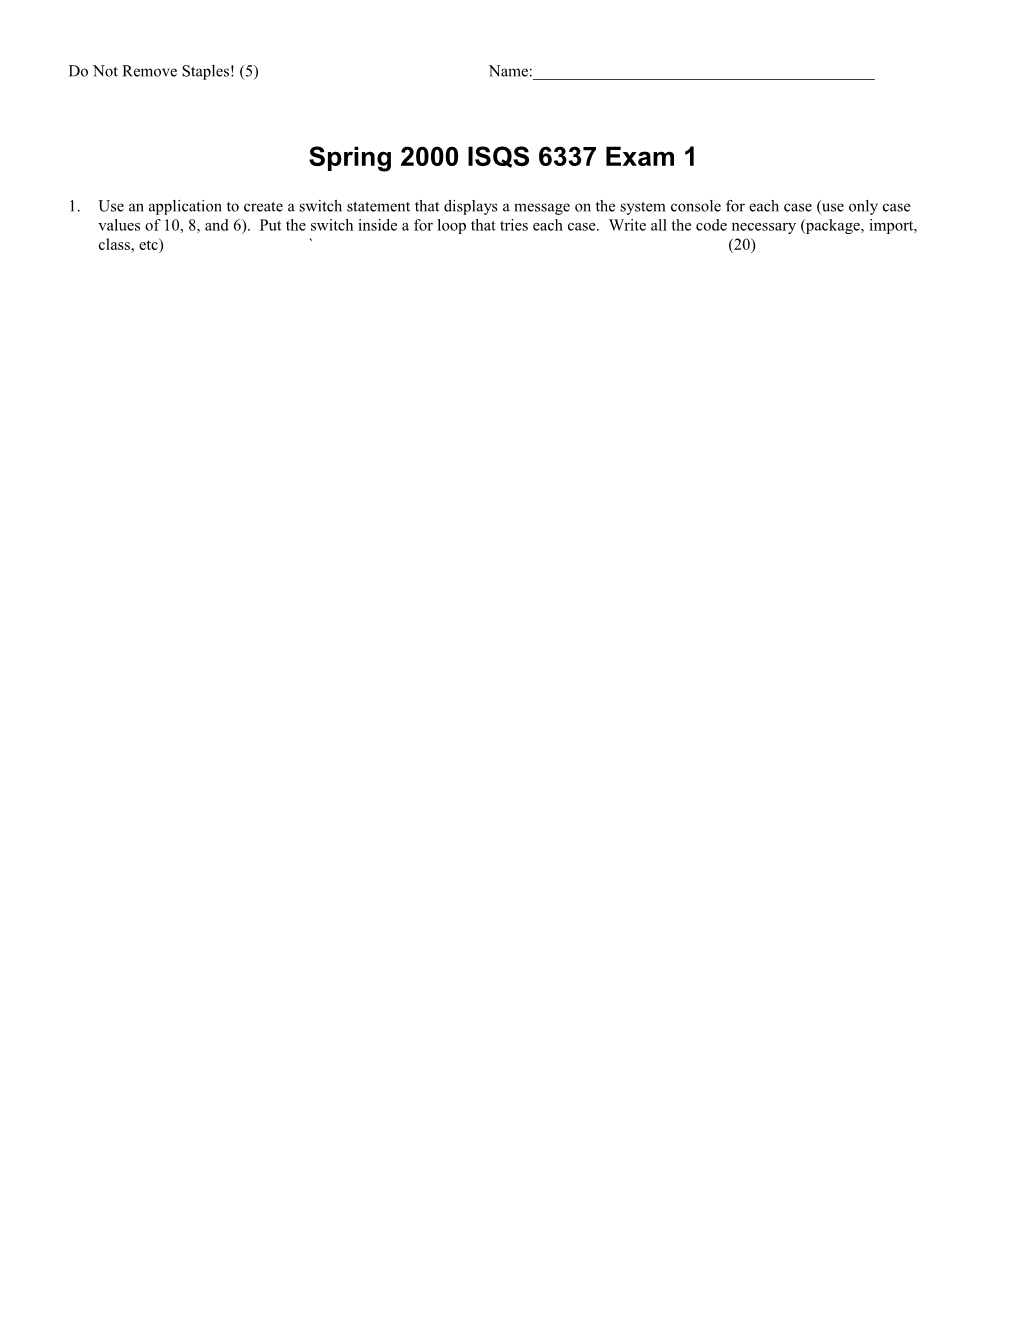 Spring 2000 ISQS 6337 Exam 1